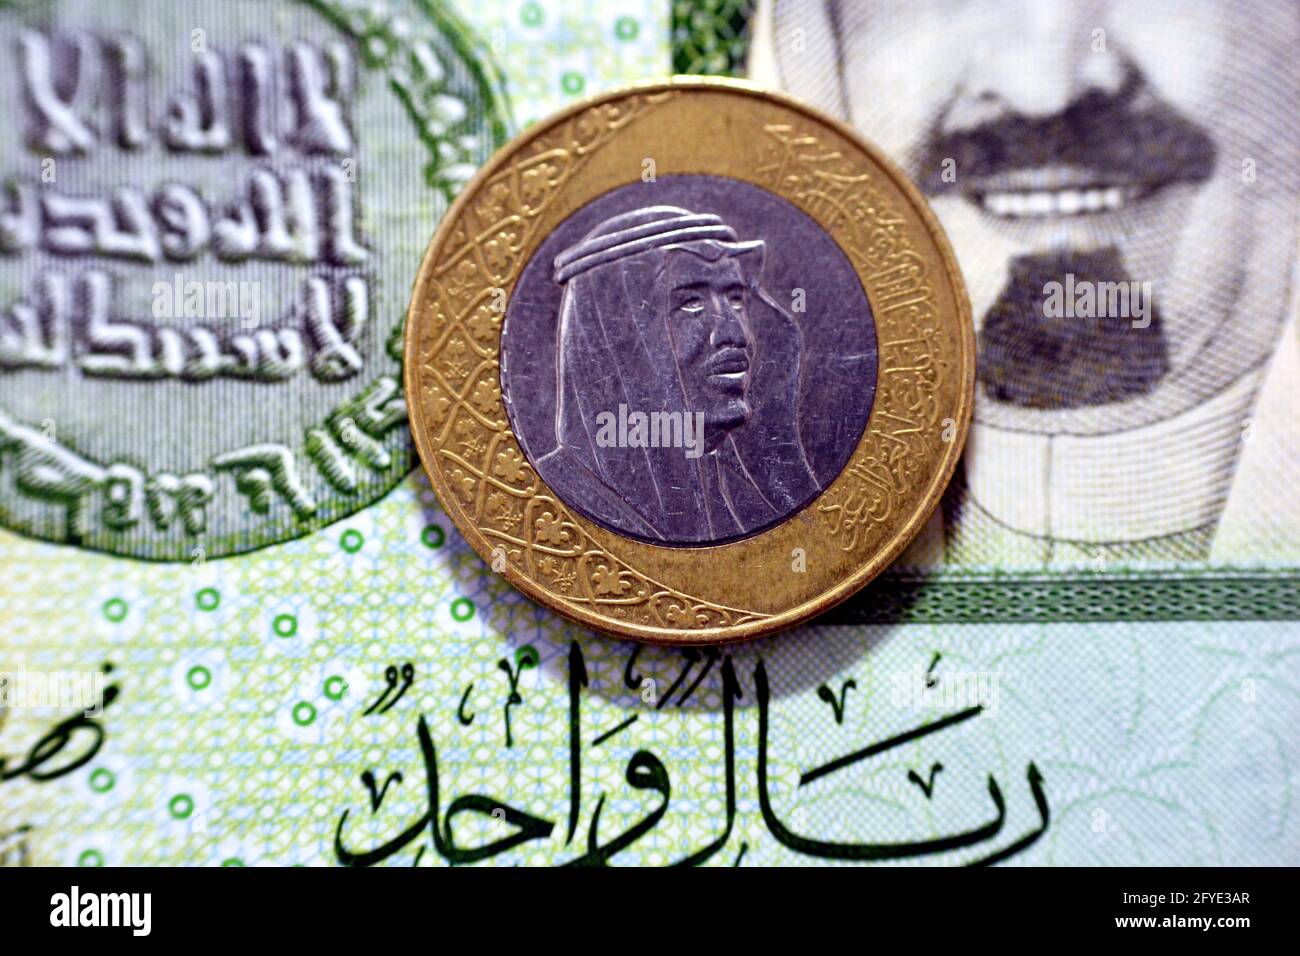 Una moneta riyal dell'Arabia Saudita (lato opposto) anno 2016 su 1 banconote di carta riyal Saudita di fondo, un metallo e una banconota riyals Saudita insieme, 1 Saudita Foto Stock